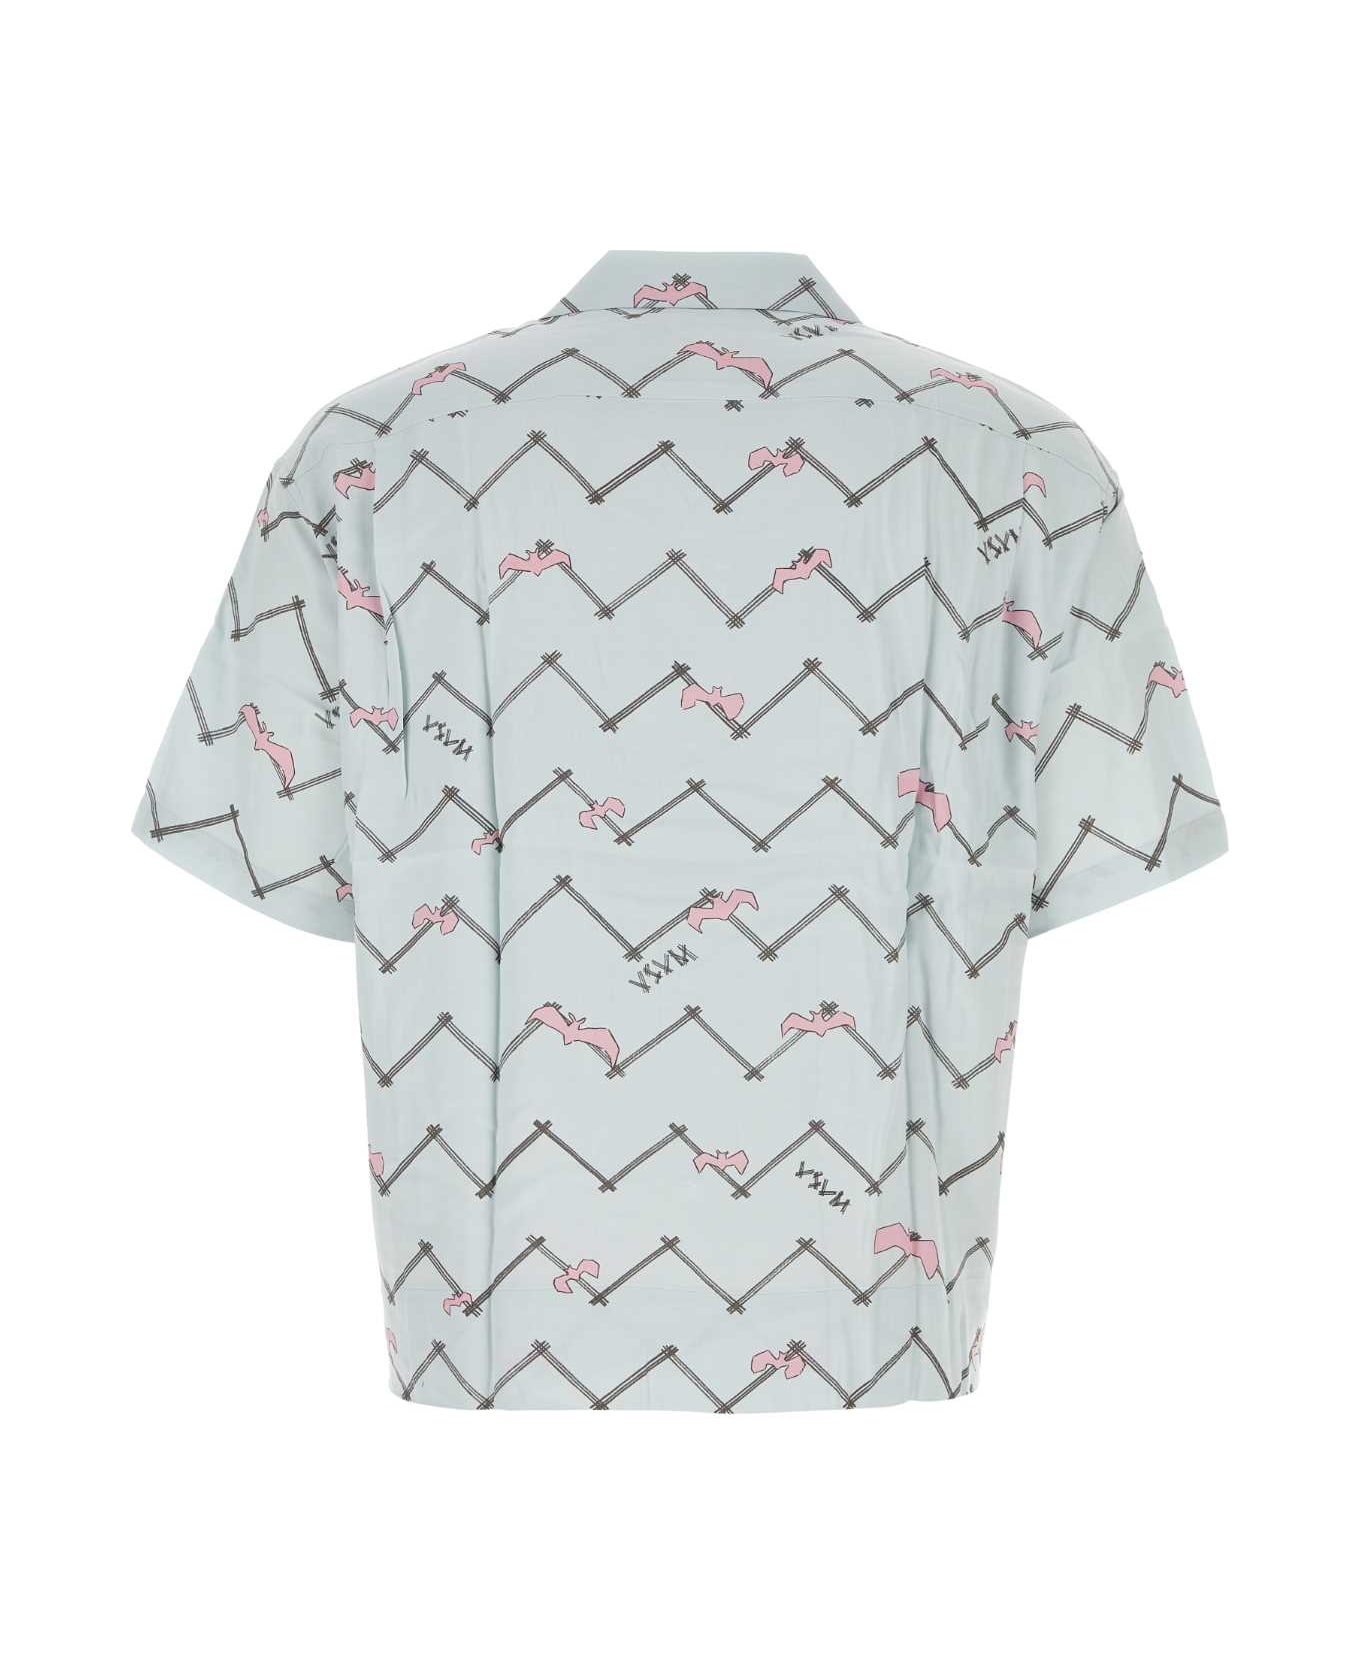 Visvim Printed Rayon Copa Shirt - LTBLUE シャツ